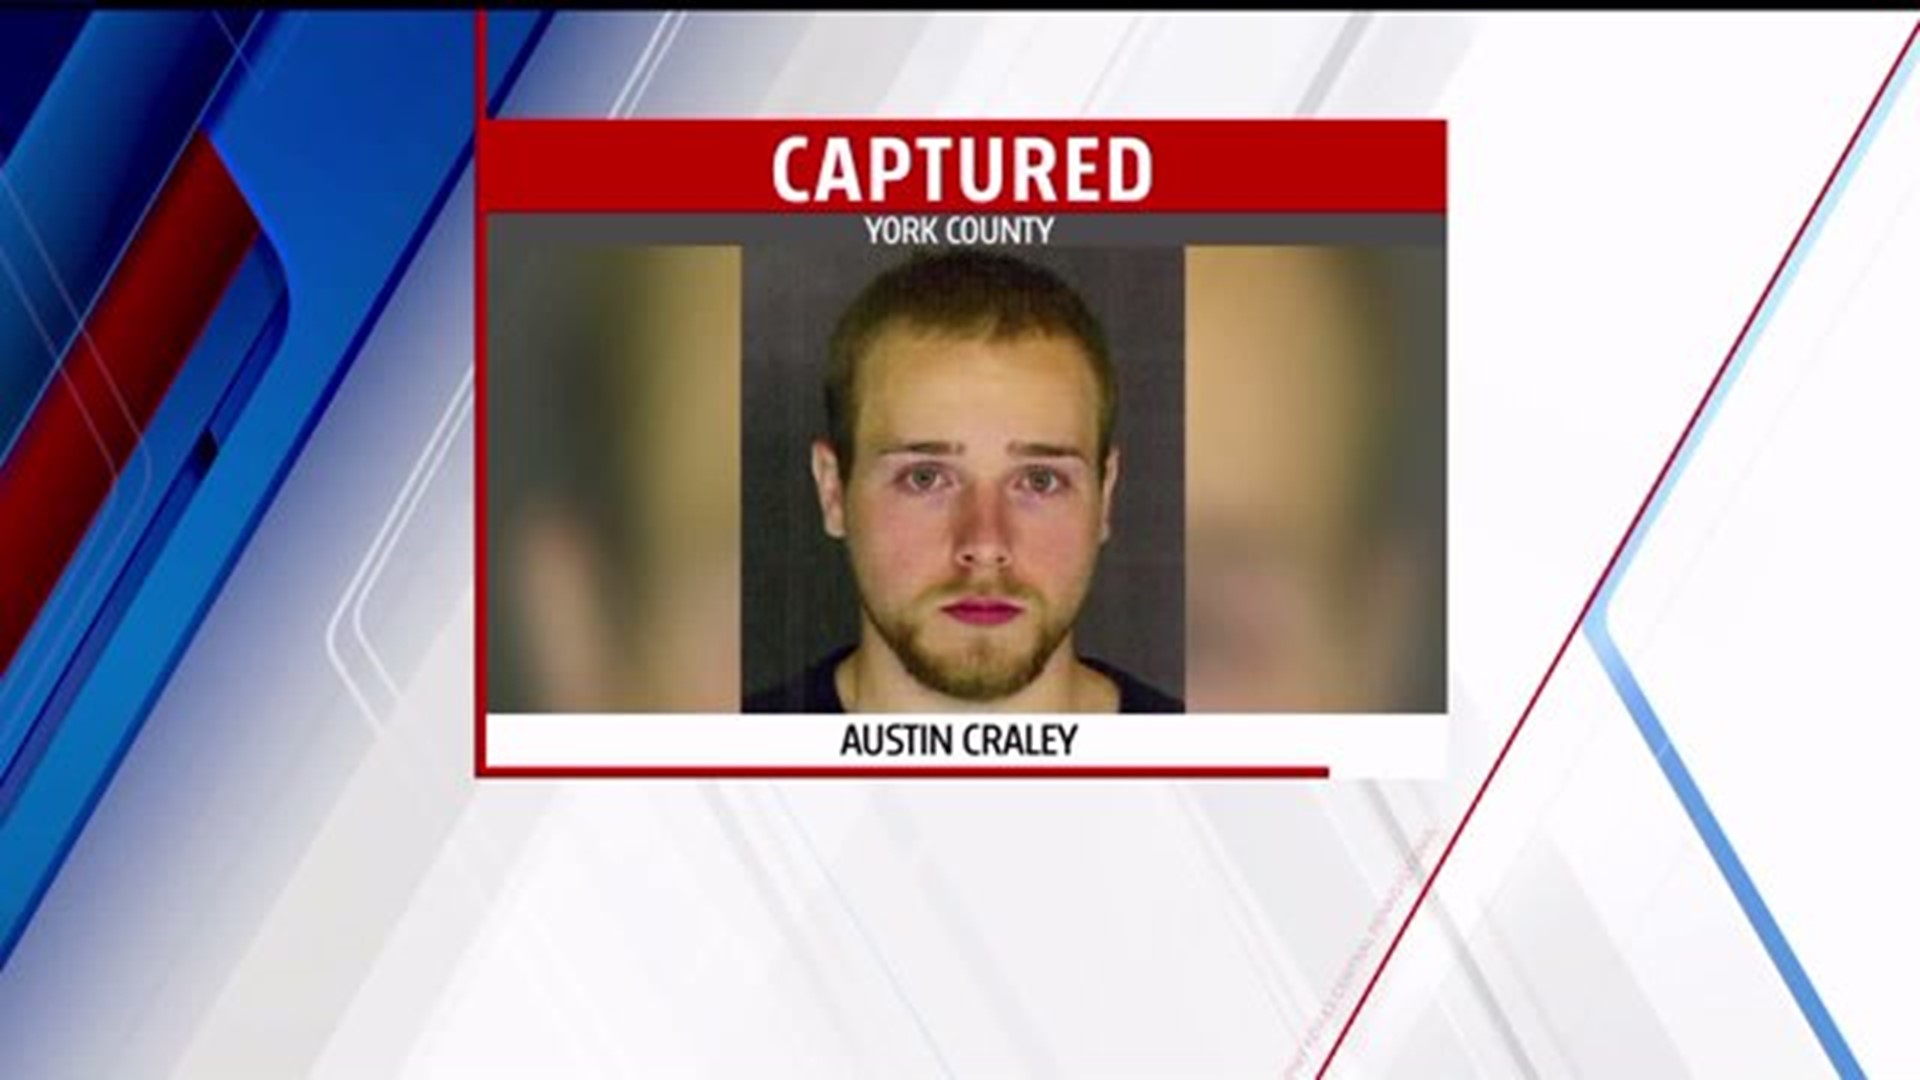 Austin Craley captured